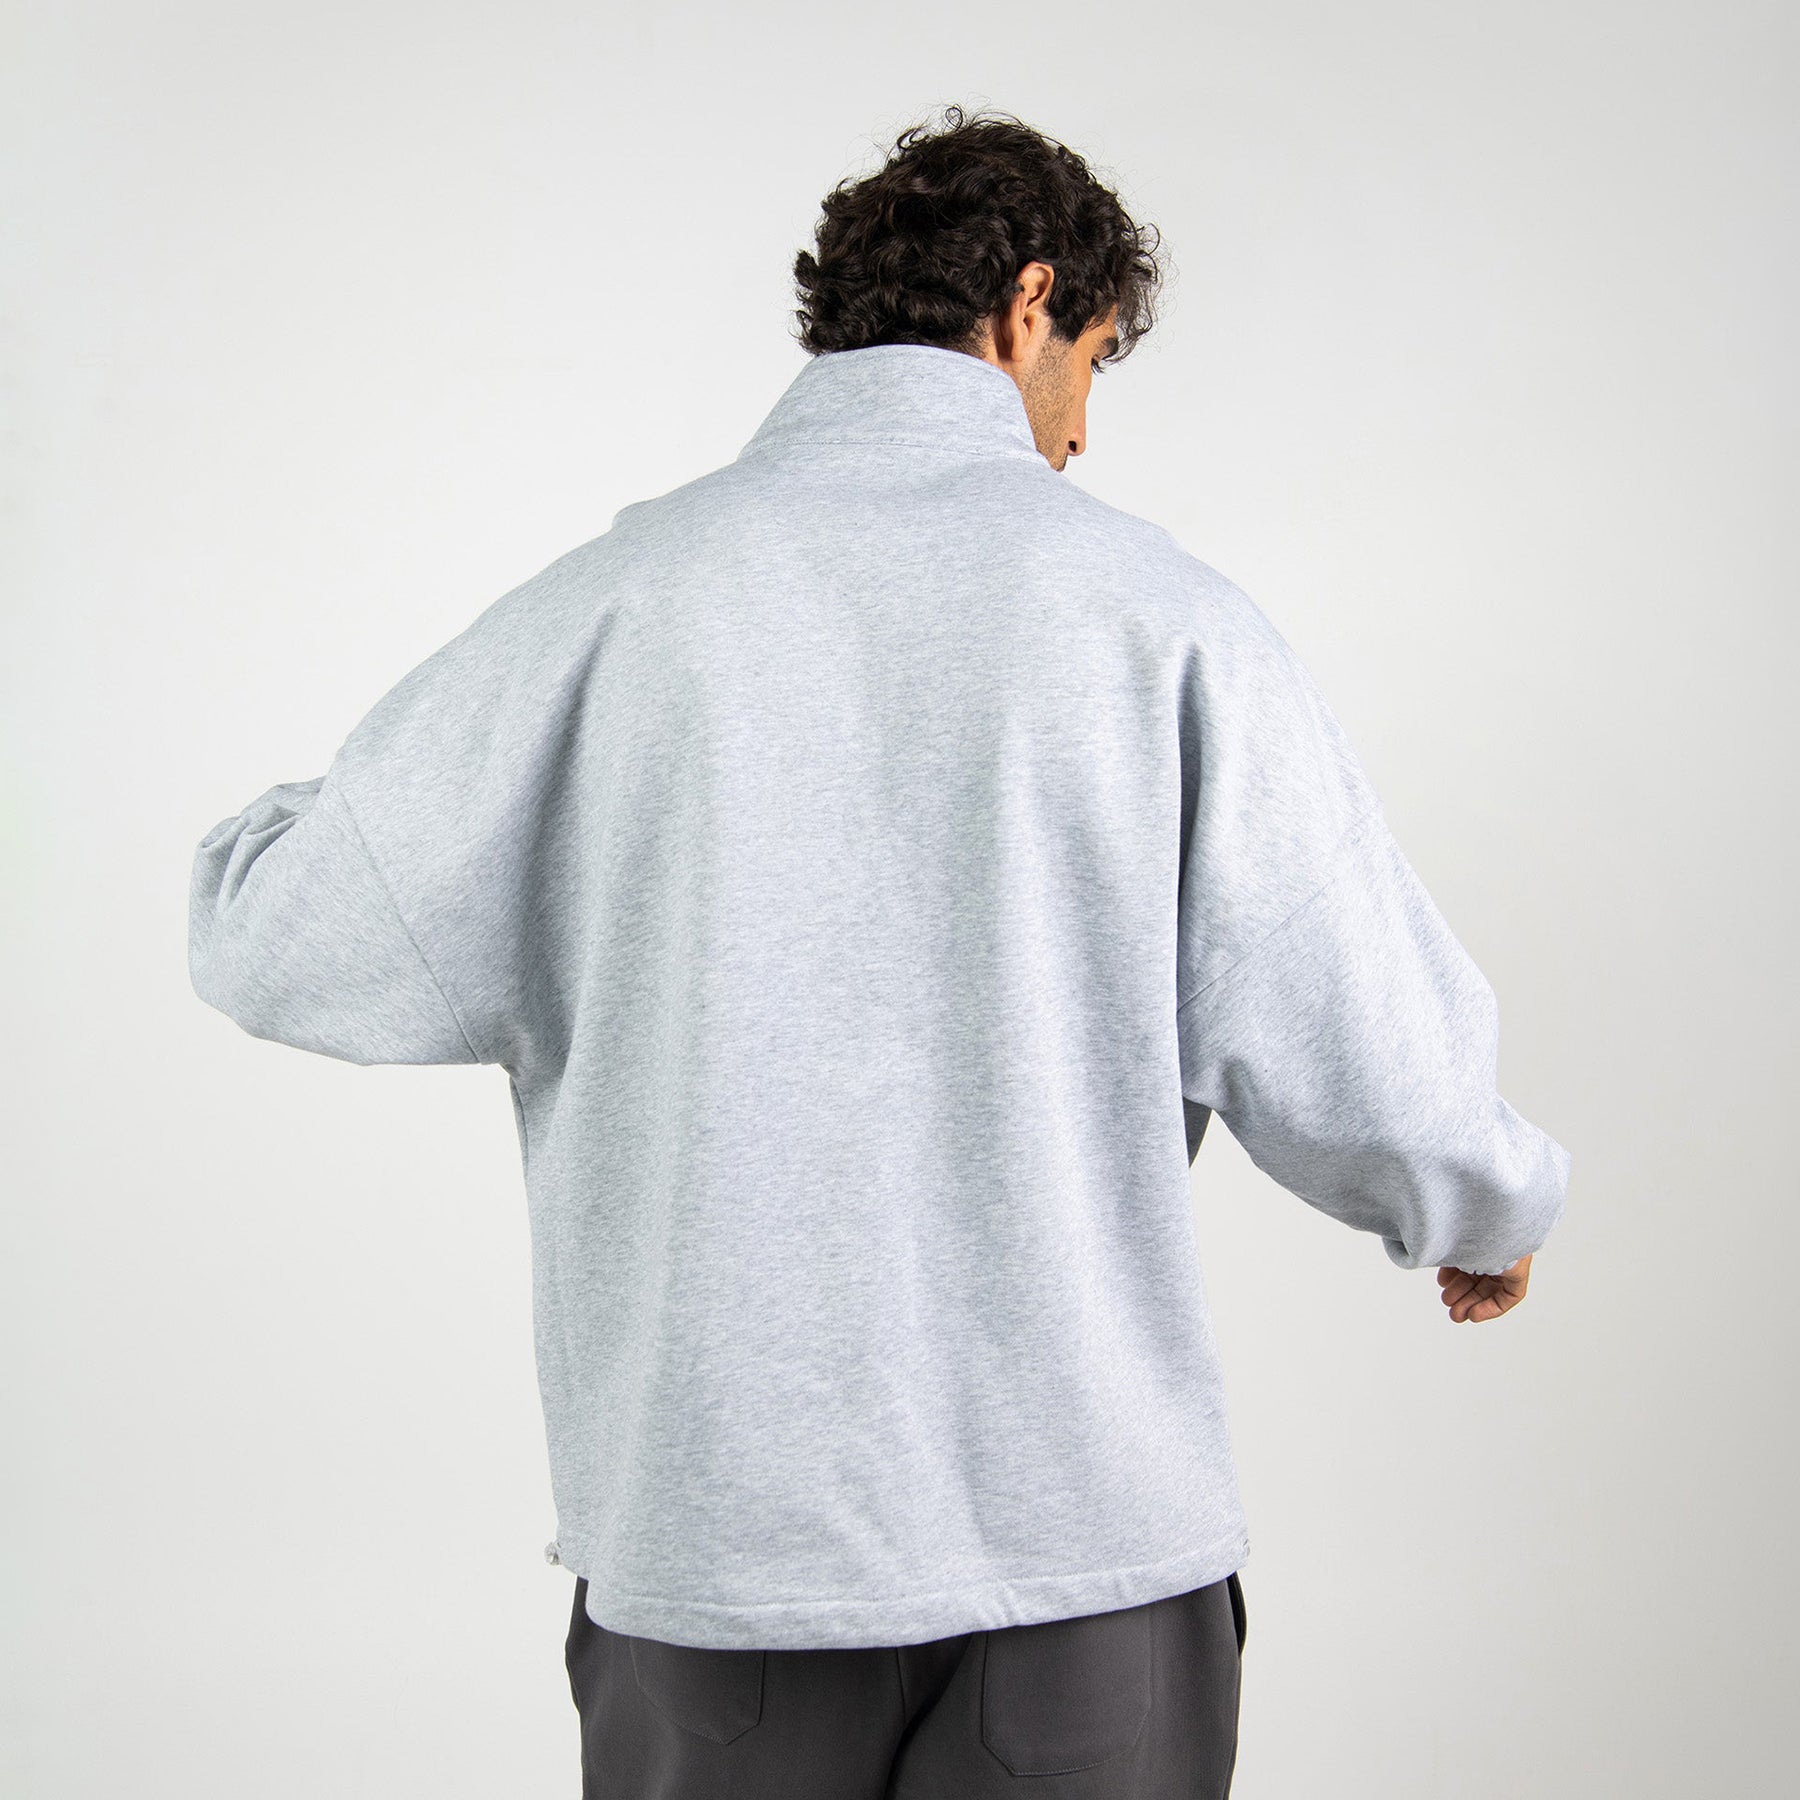 Stitched Turtleneck Sweater